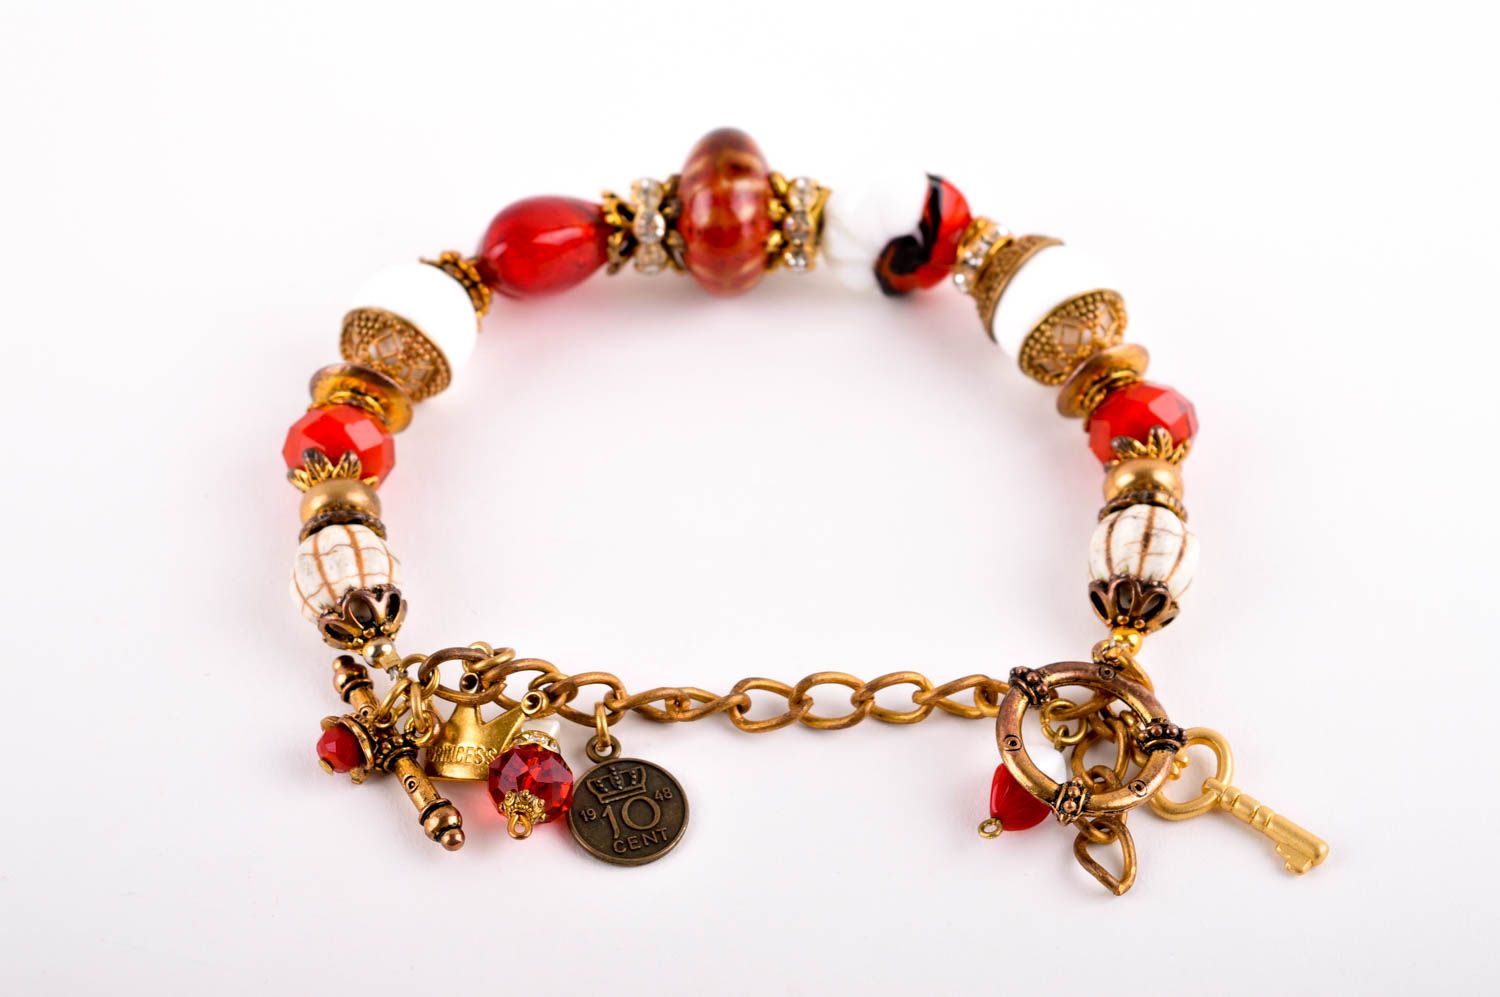 Handmade bracelet with natural stones jewelry stones stylish fashion jewelry photo 4